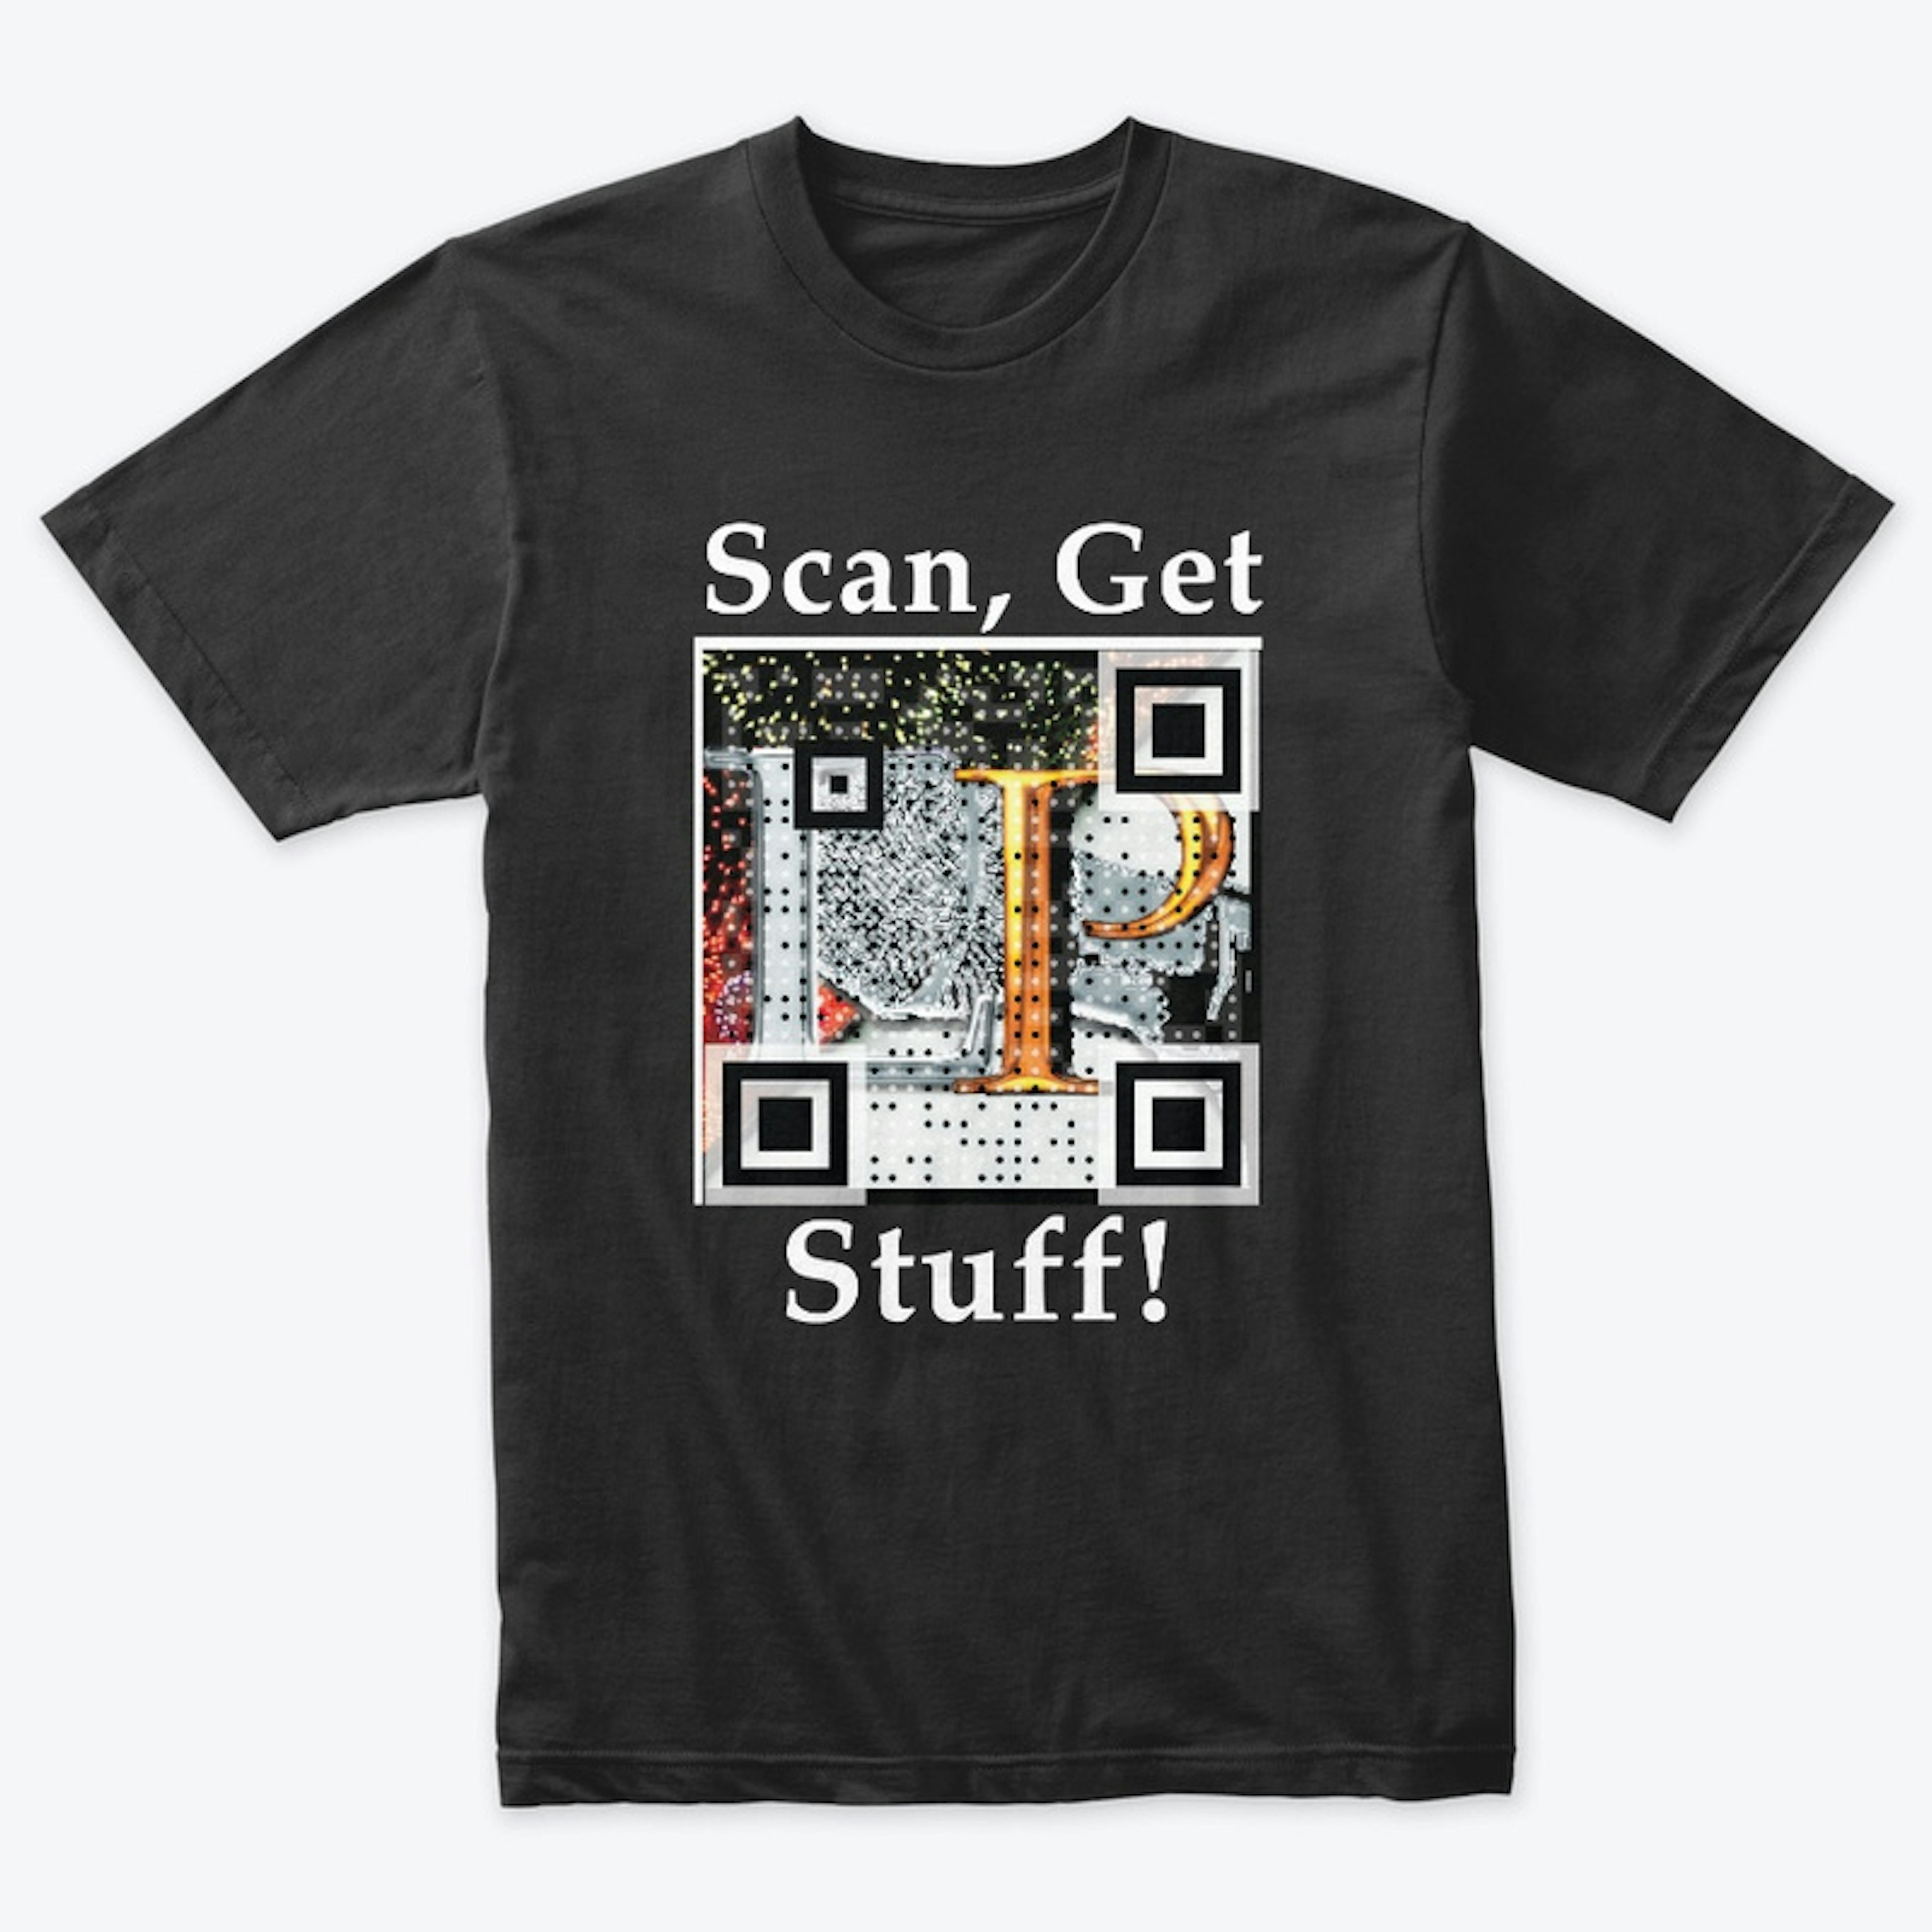 Scan, Get LP Stuff 